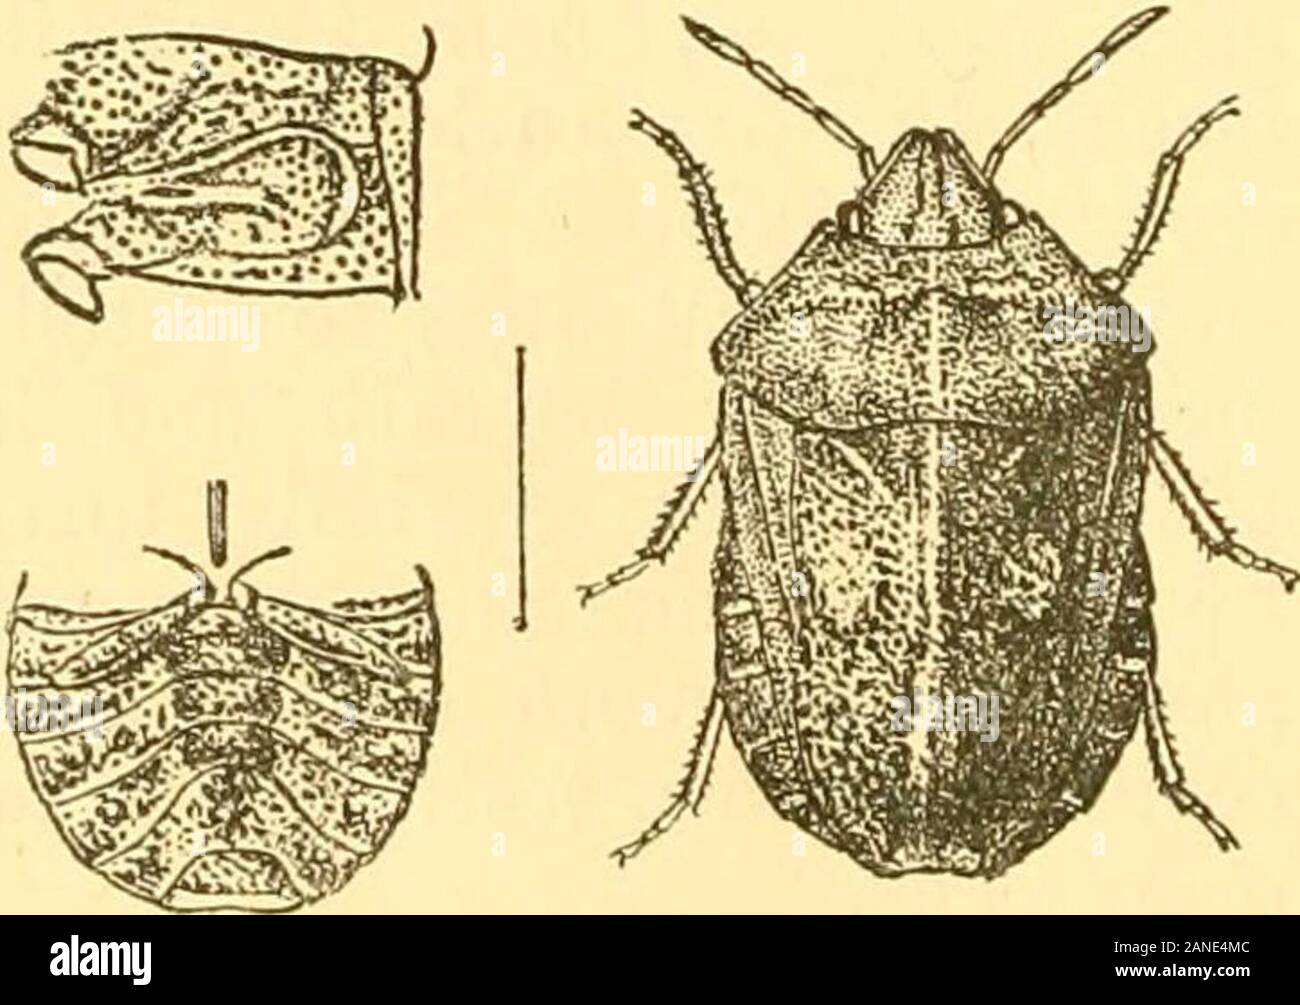 Rhynchota .. . ; scutellum much narrower than the abdomen, the lateralmargins of the corium, especially at base, being exposed. Ab-domen with the counexivum fl.attened, extending beyond thelatitude of the pronotum ; tibiae sulcated above. 126. Eurygaster maura, Linn. (Cimex) Fawi. Suec. p. 246. 913 (1761) ; St&l (Platvpleurus), En. Hem. iii, p. 30. 4 (1873) ; Leth.  Sev. Cat. Oen. Hhn. i, p. 45 (1893) et synon.; Atk. J. A. S. B. Ivi, p. 187. 105 (1887).Thyreocoris austriacus, Schrankj Faun. Boica, ii, p. 68. (1801). Tetyra picta, Fabr. Syst. Rhym/.-^. 136. 38 (1803).Eurygaster cognatus & orie Stock Photo